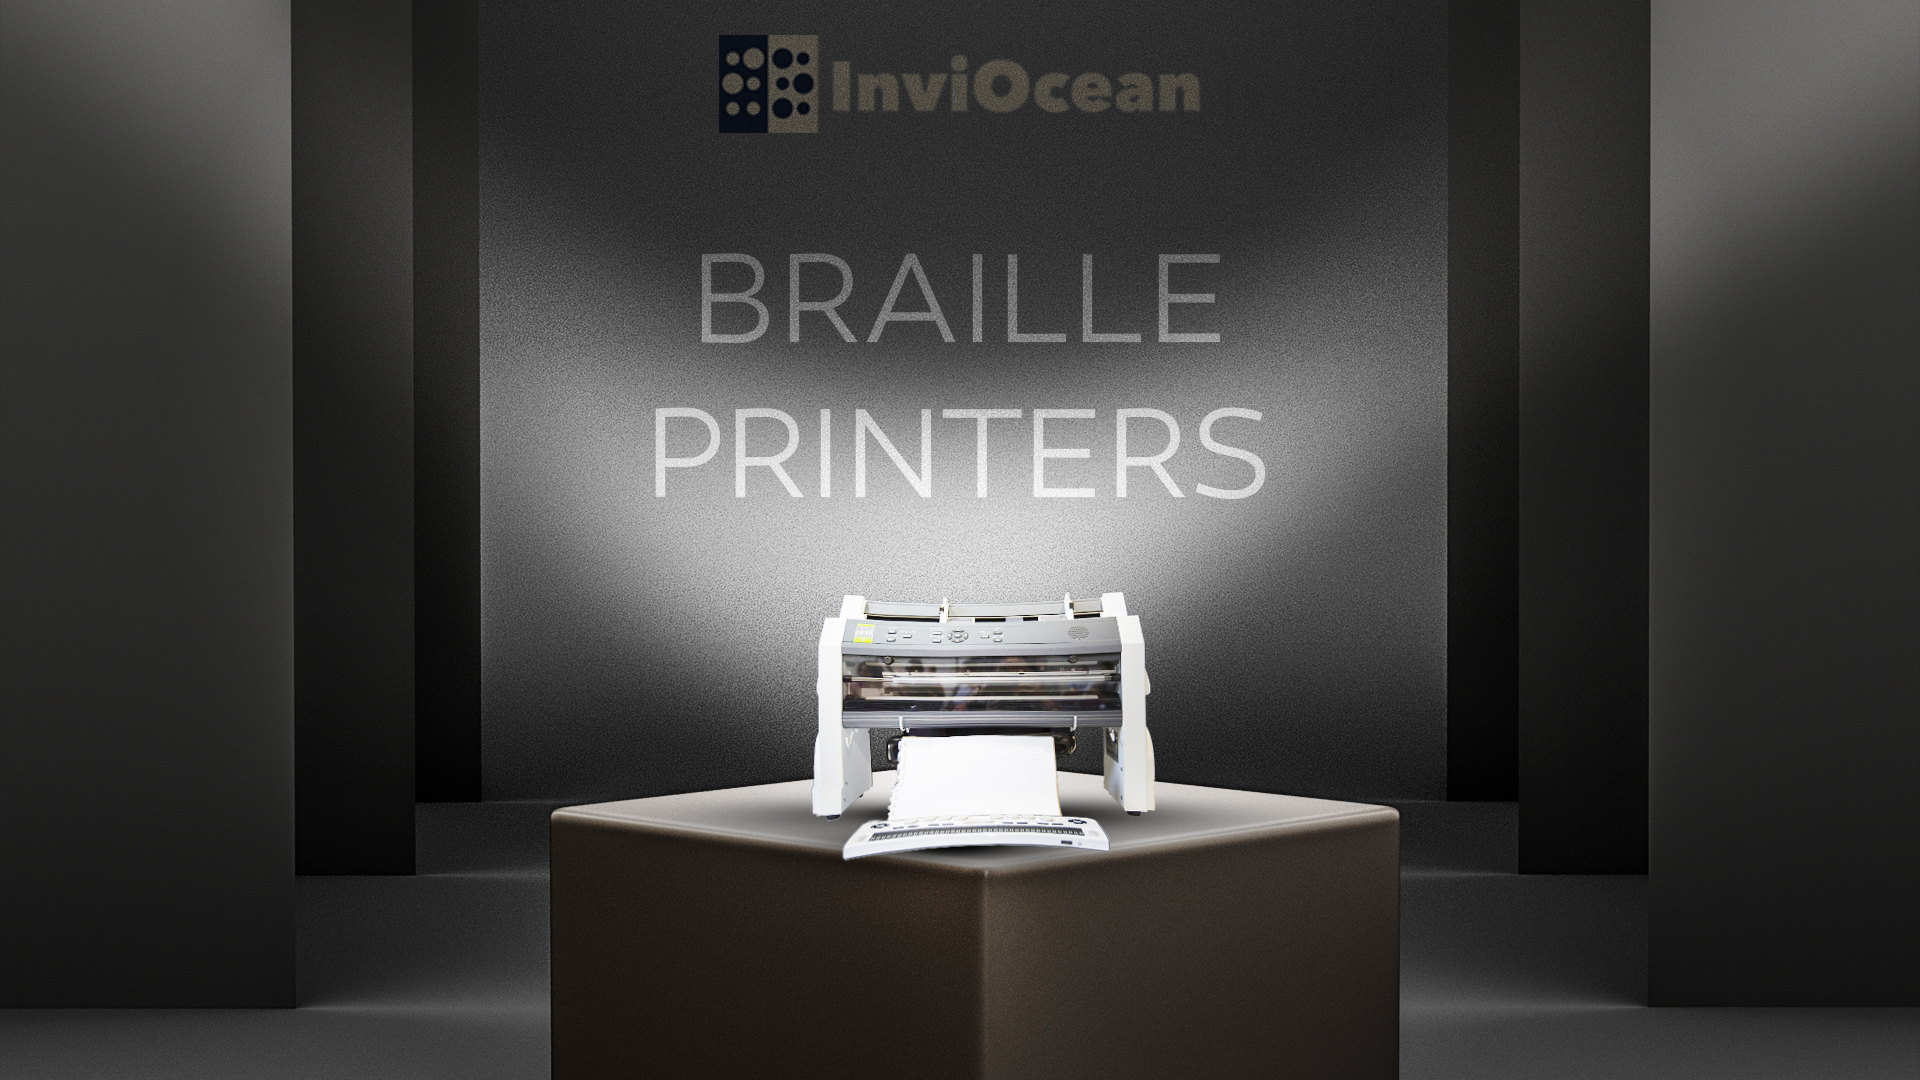 Braille printers